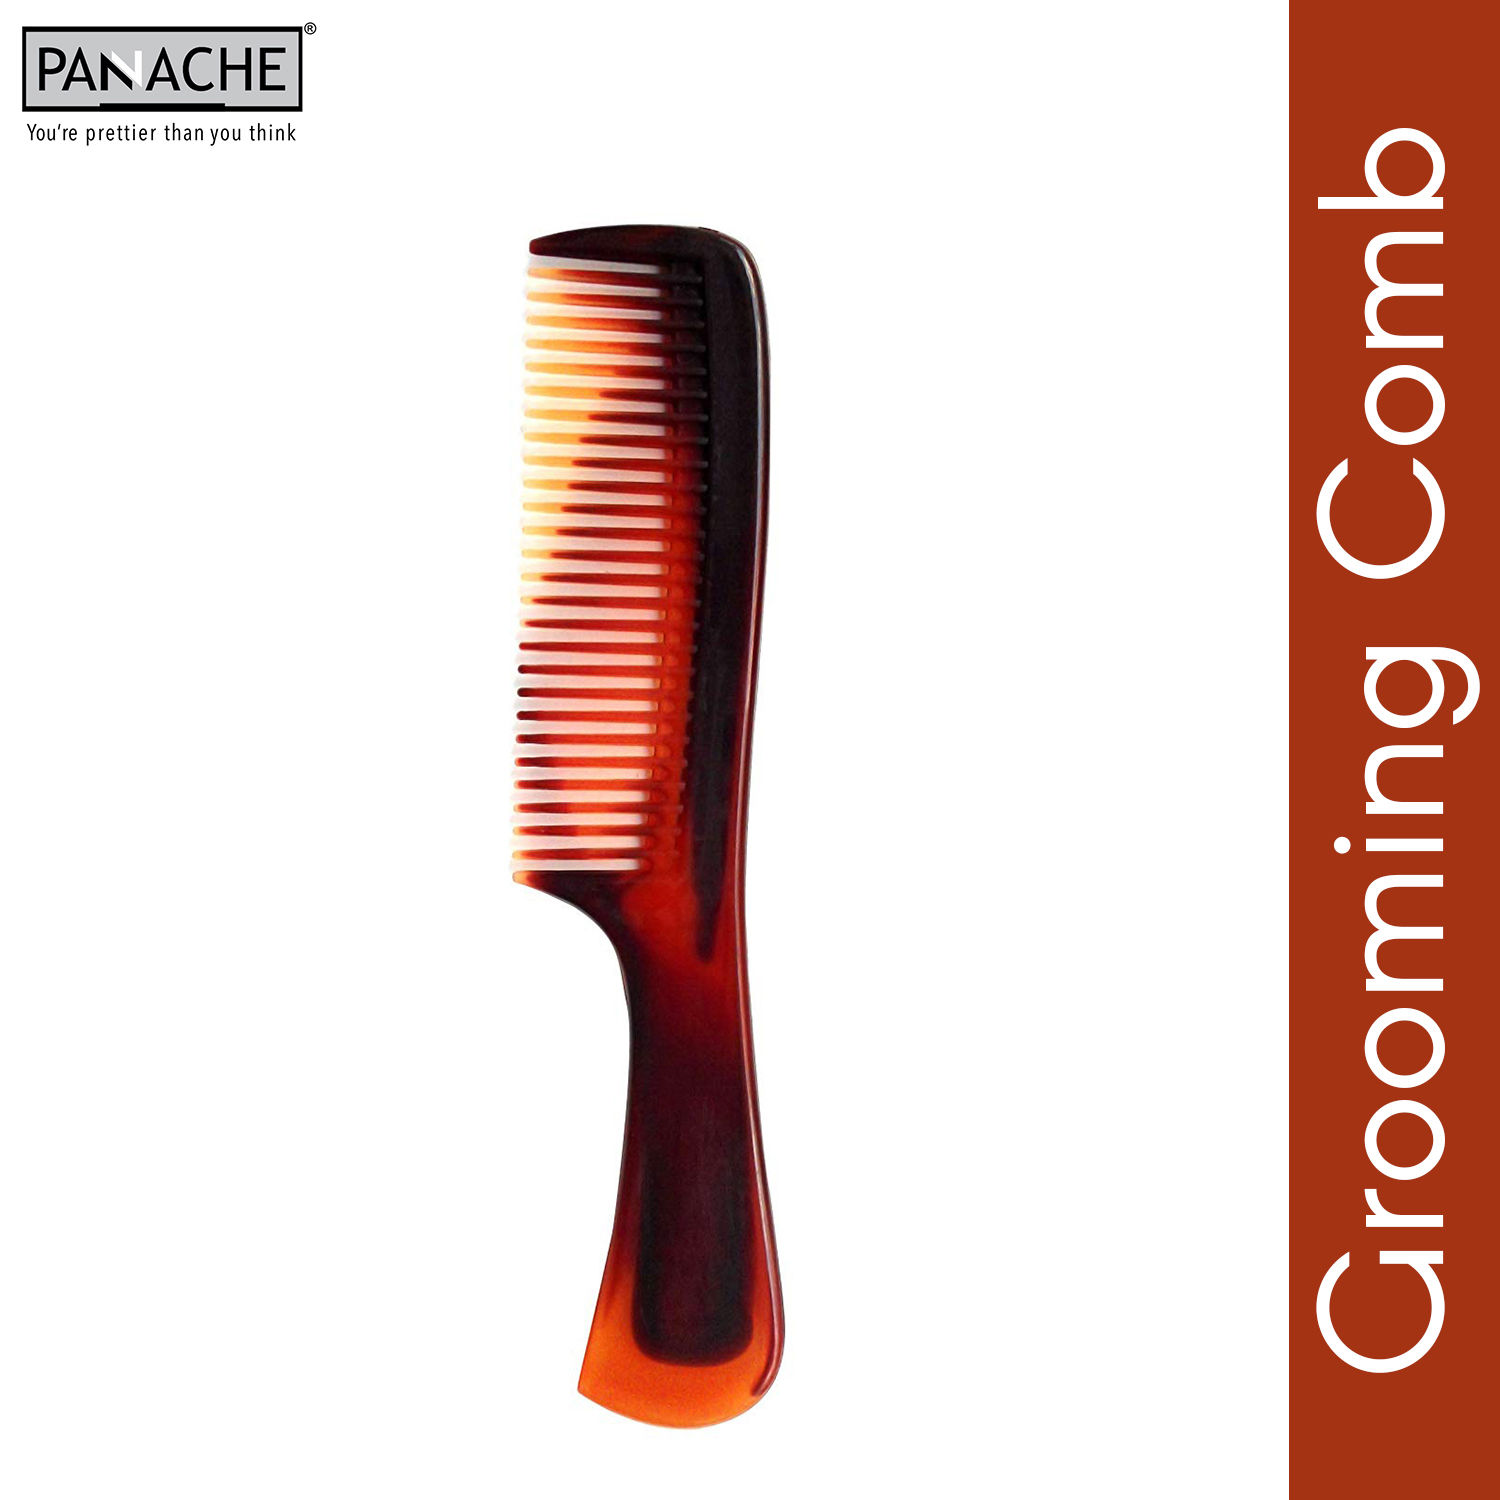 Panache Grooming Comb